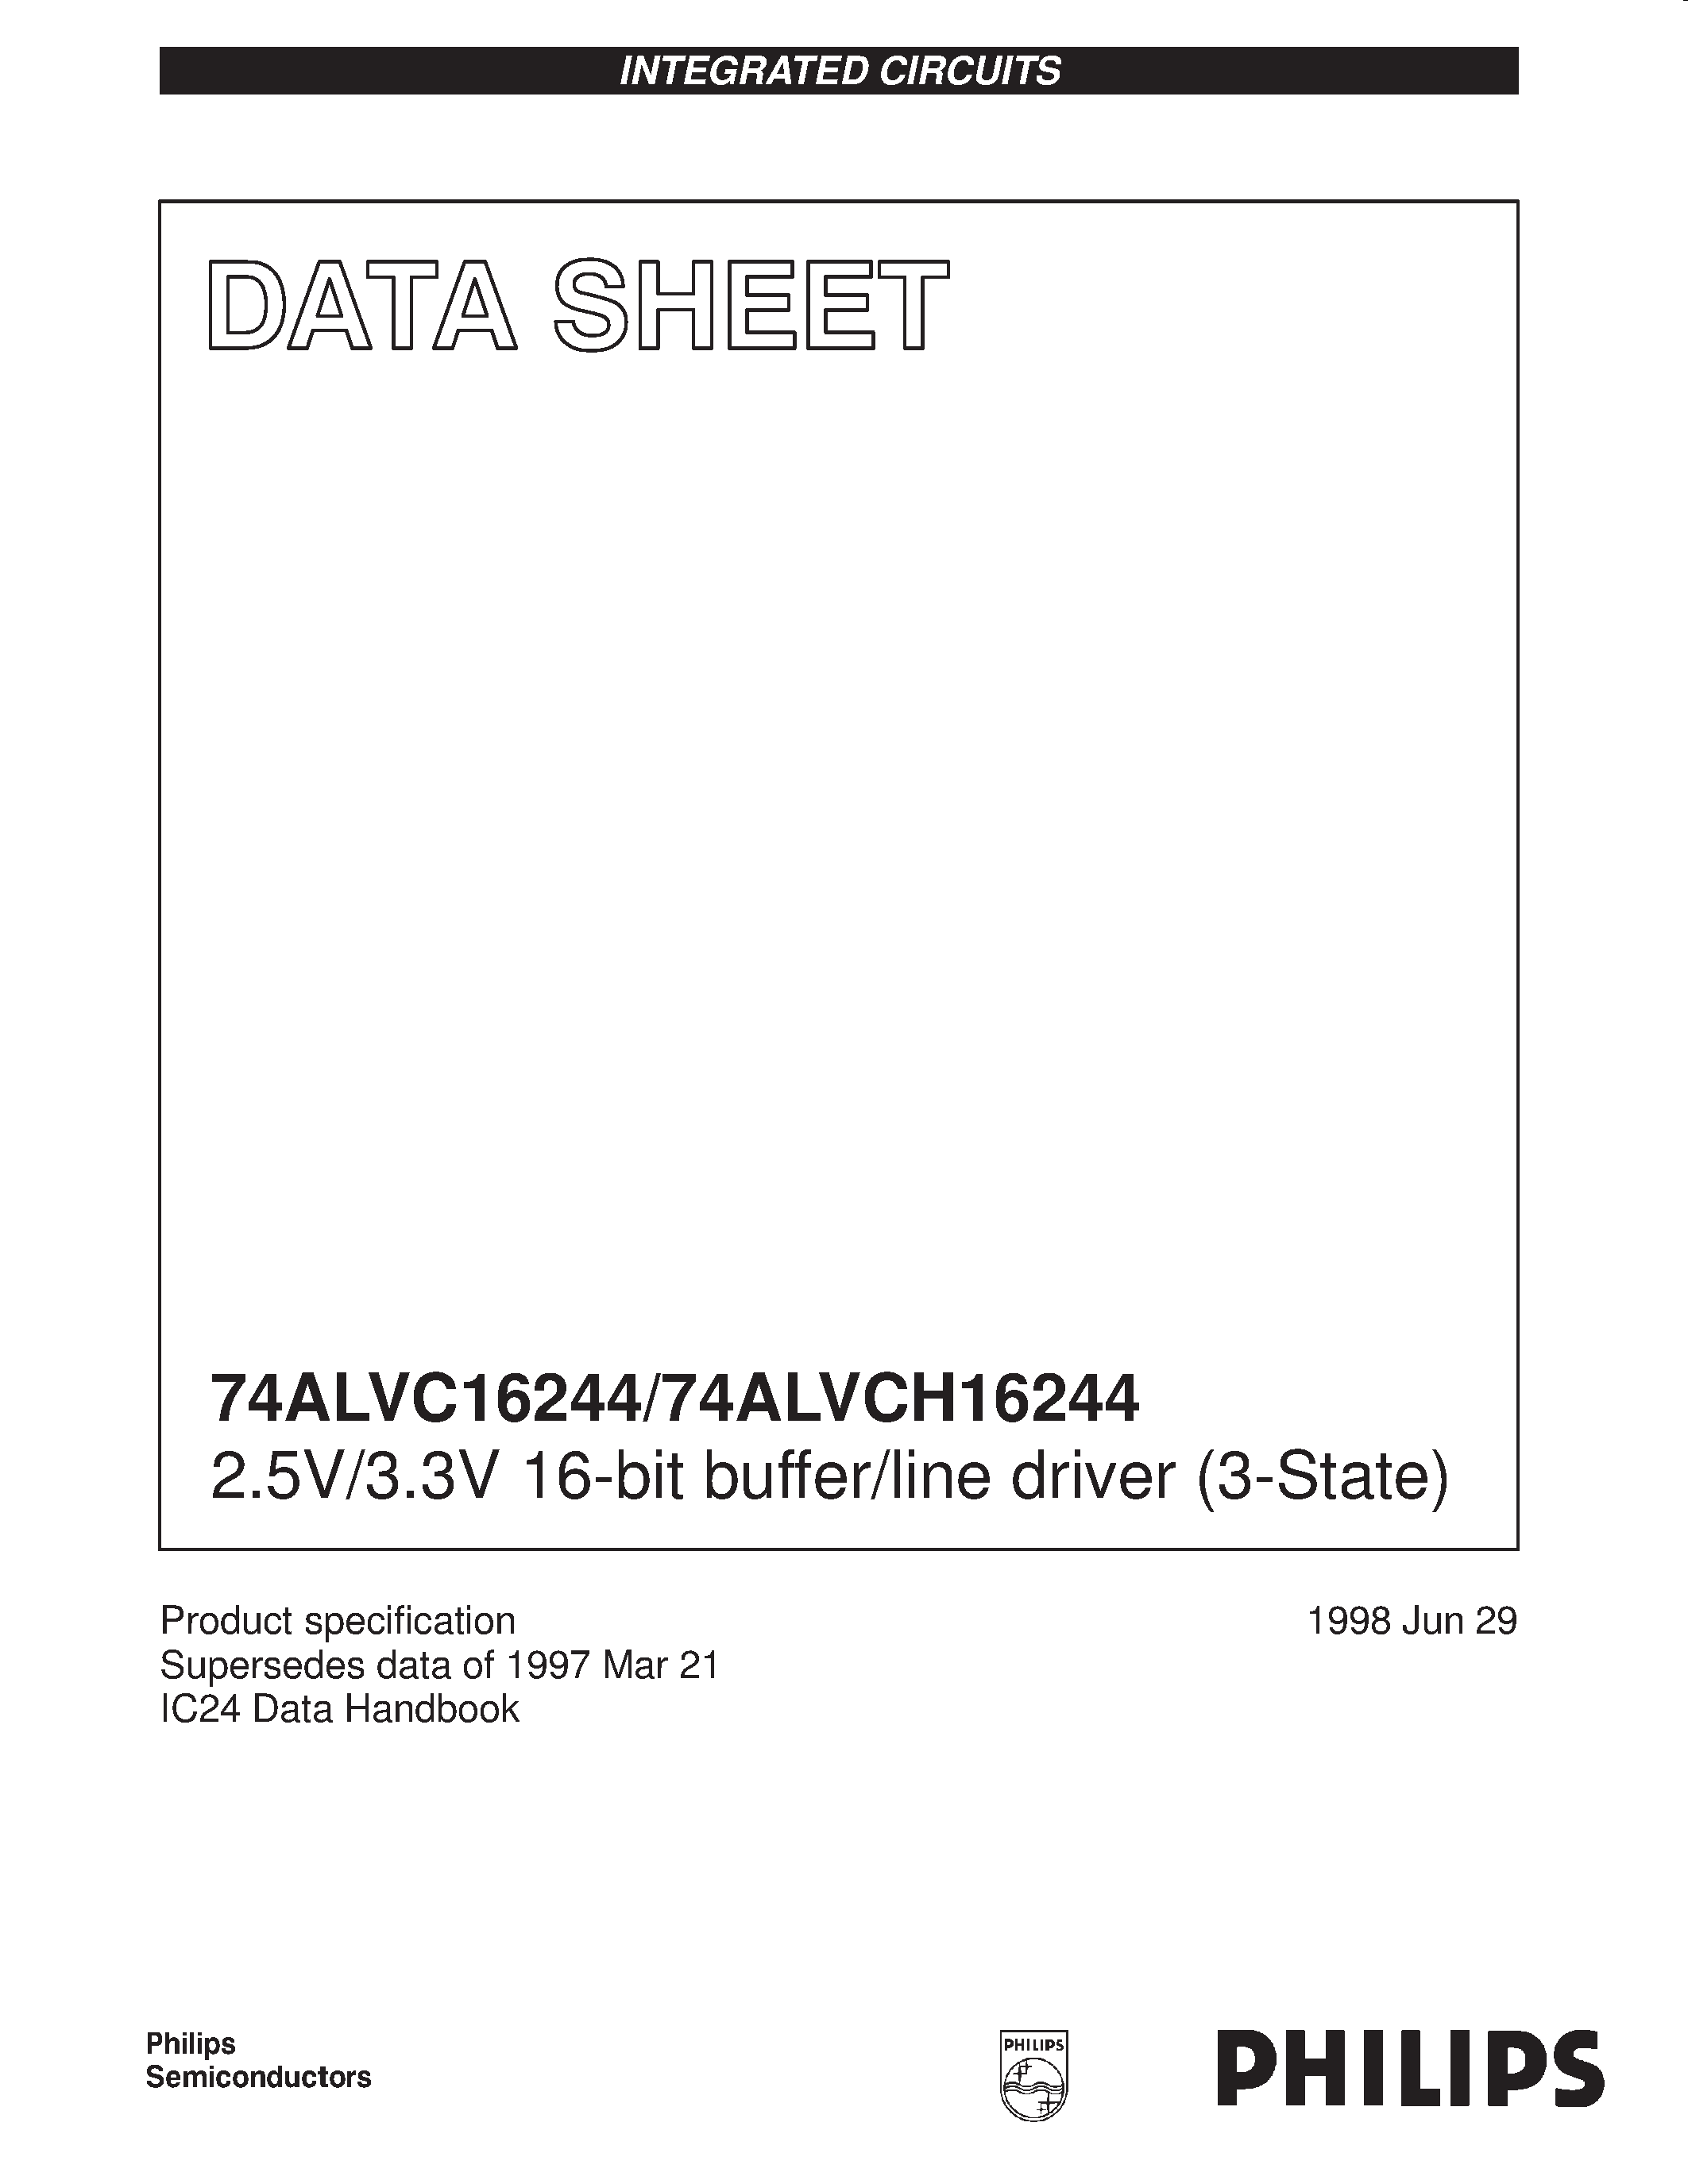 Даташит 74ALVCH16244DL - 2.5V/3.3V 16-bit buffer/line driver 3-State страница 1